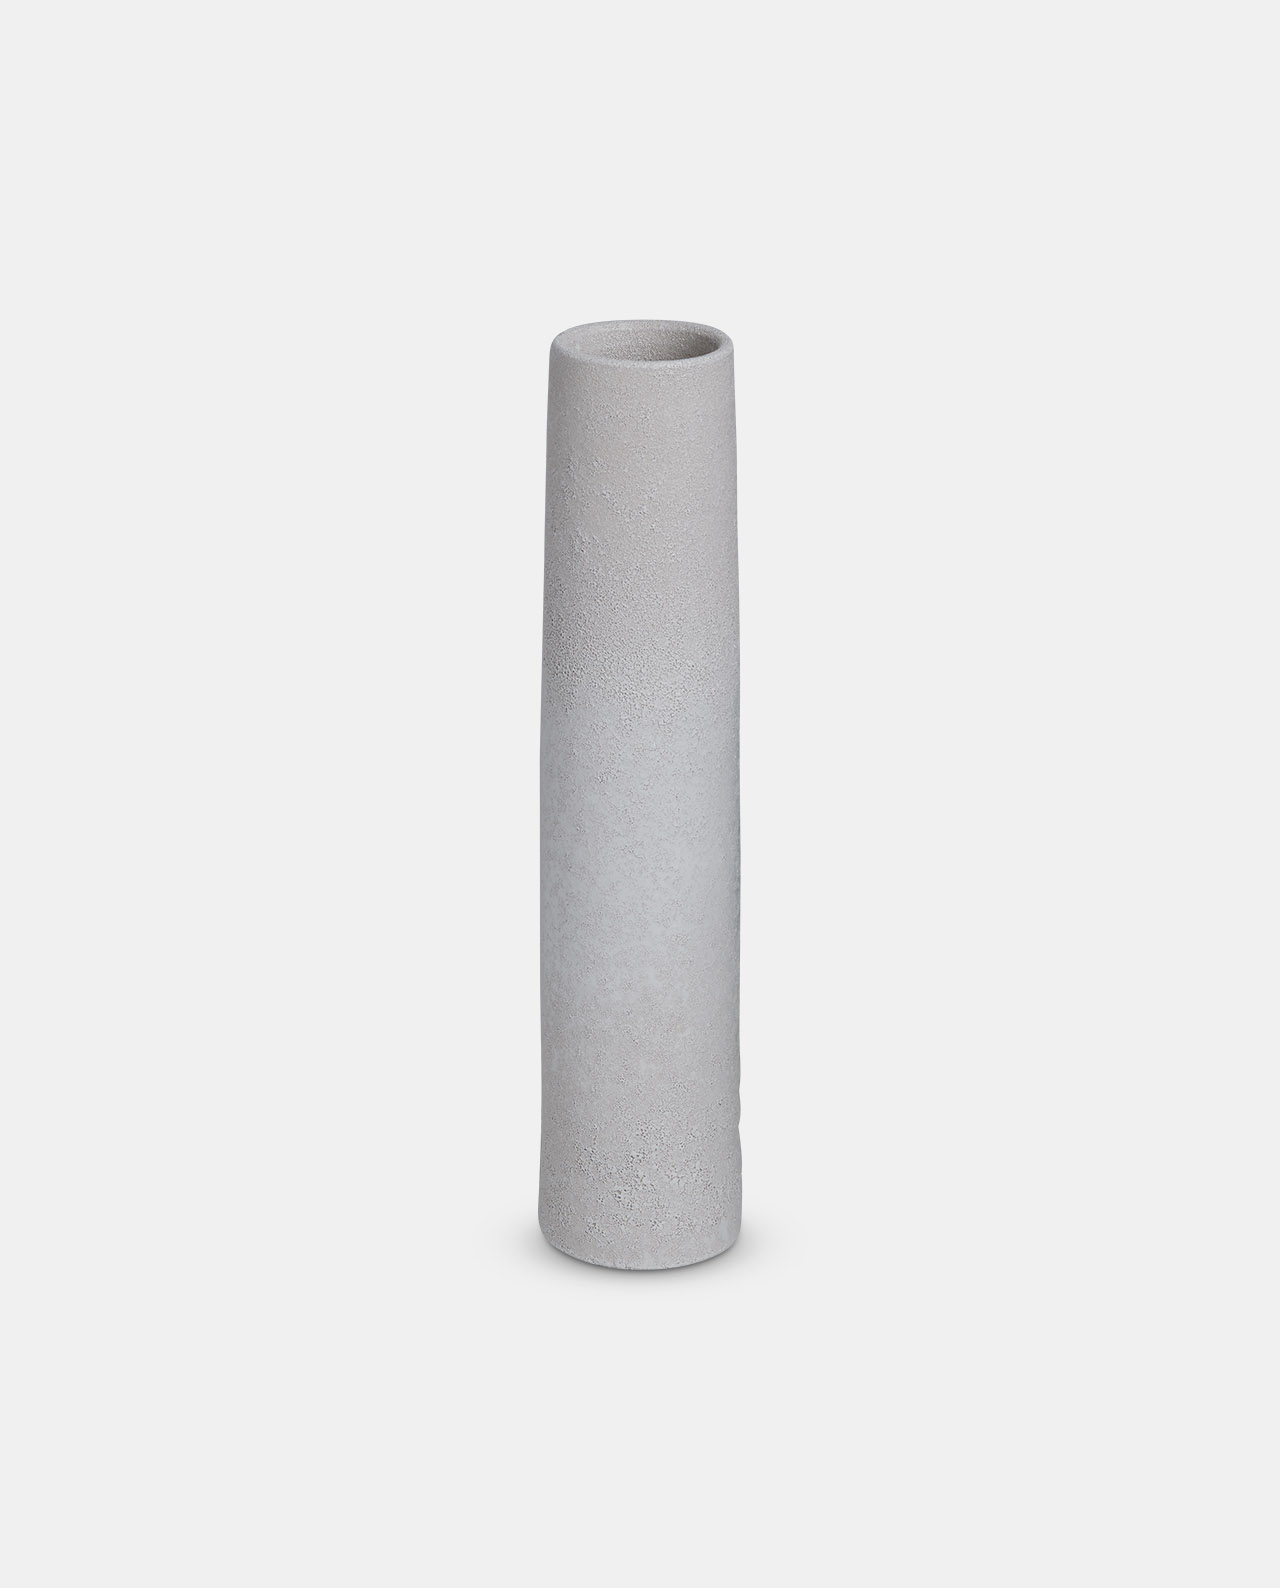 White Glazed Ceramic Vase